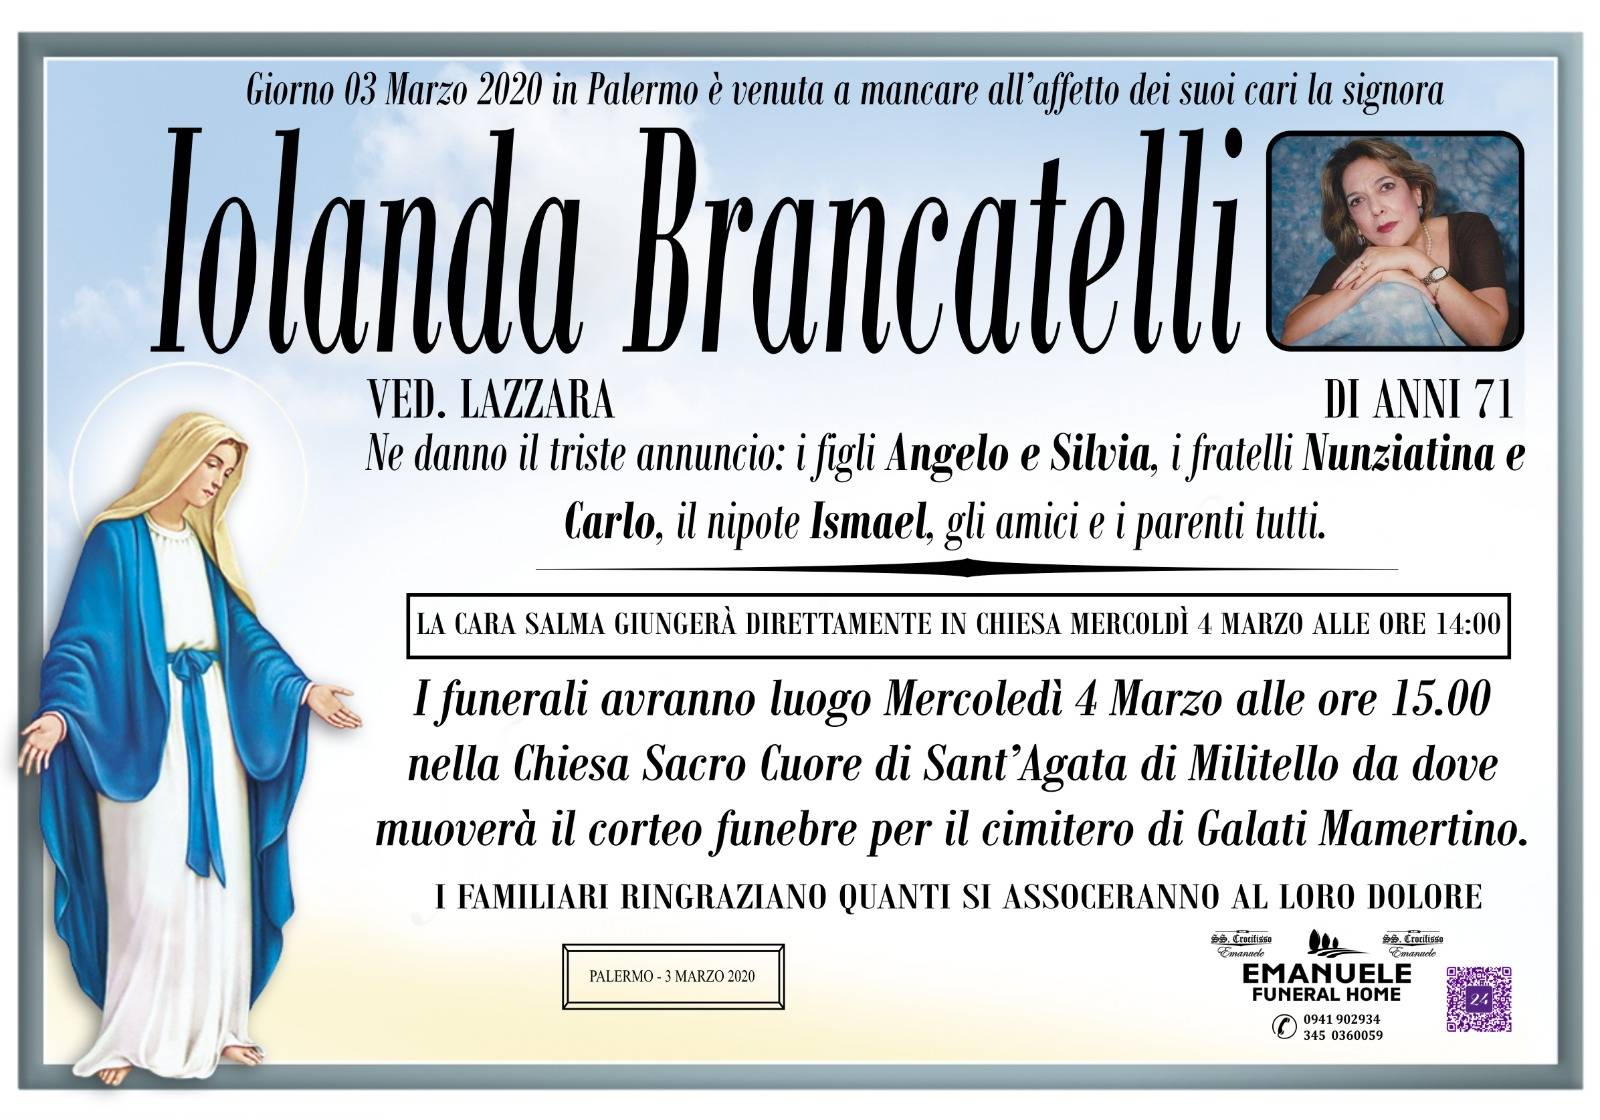 Iolanda Brancatelli